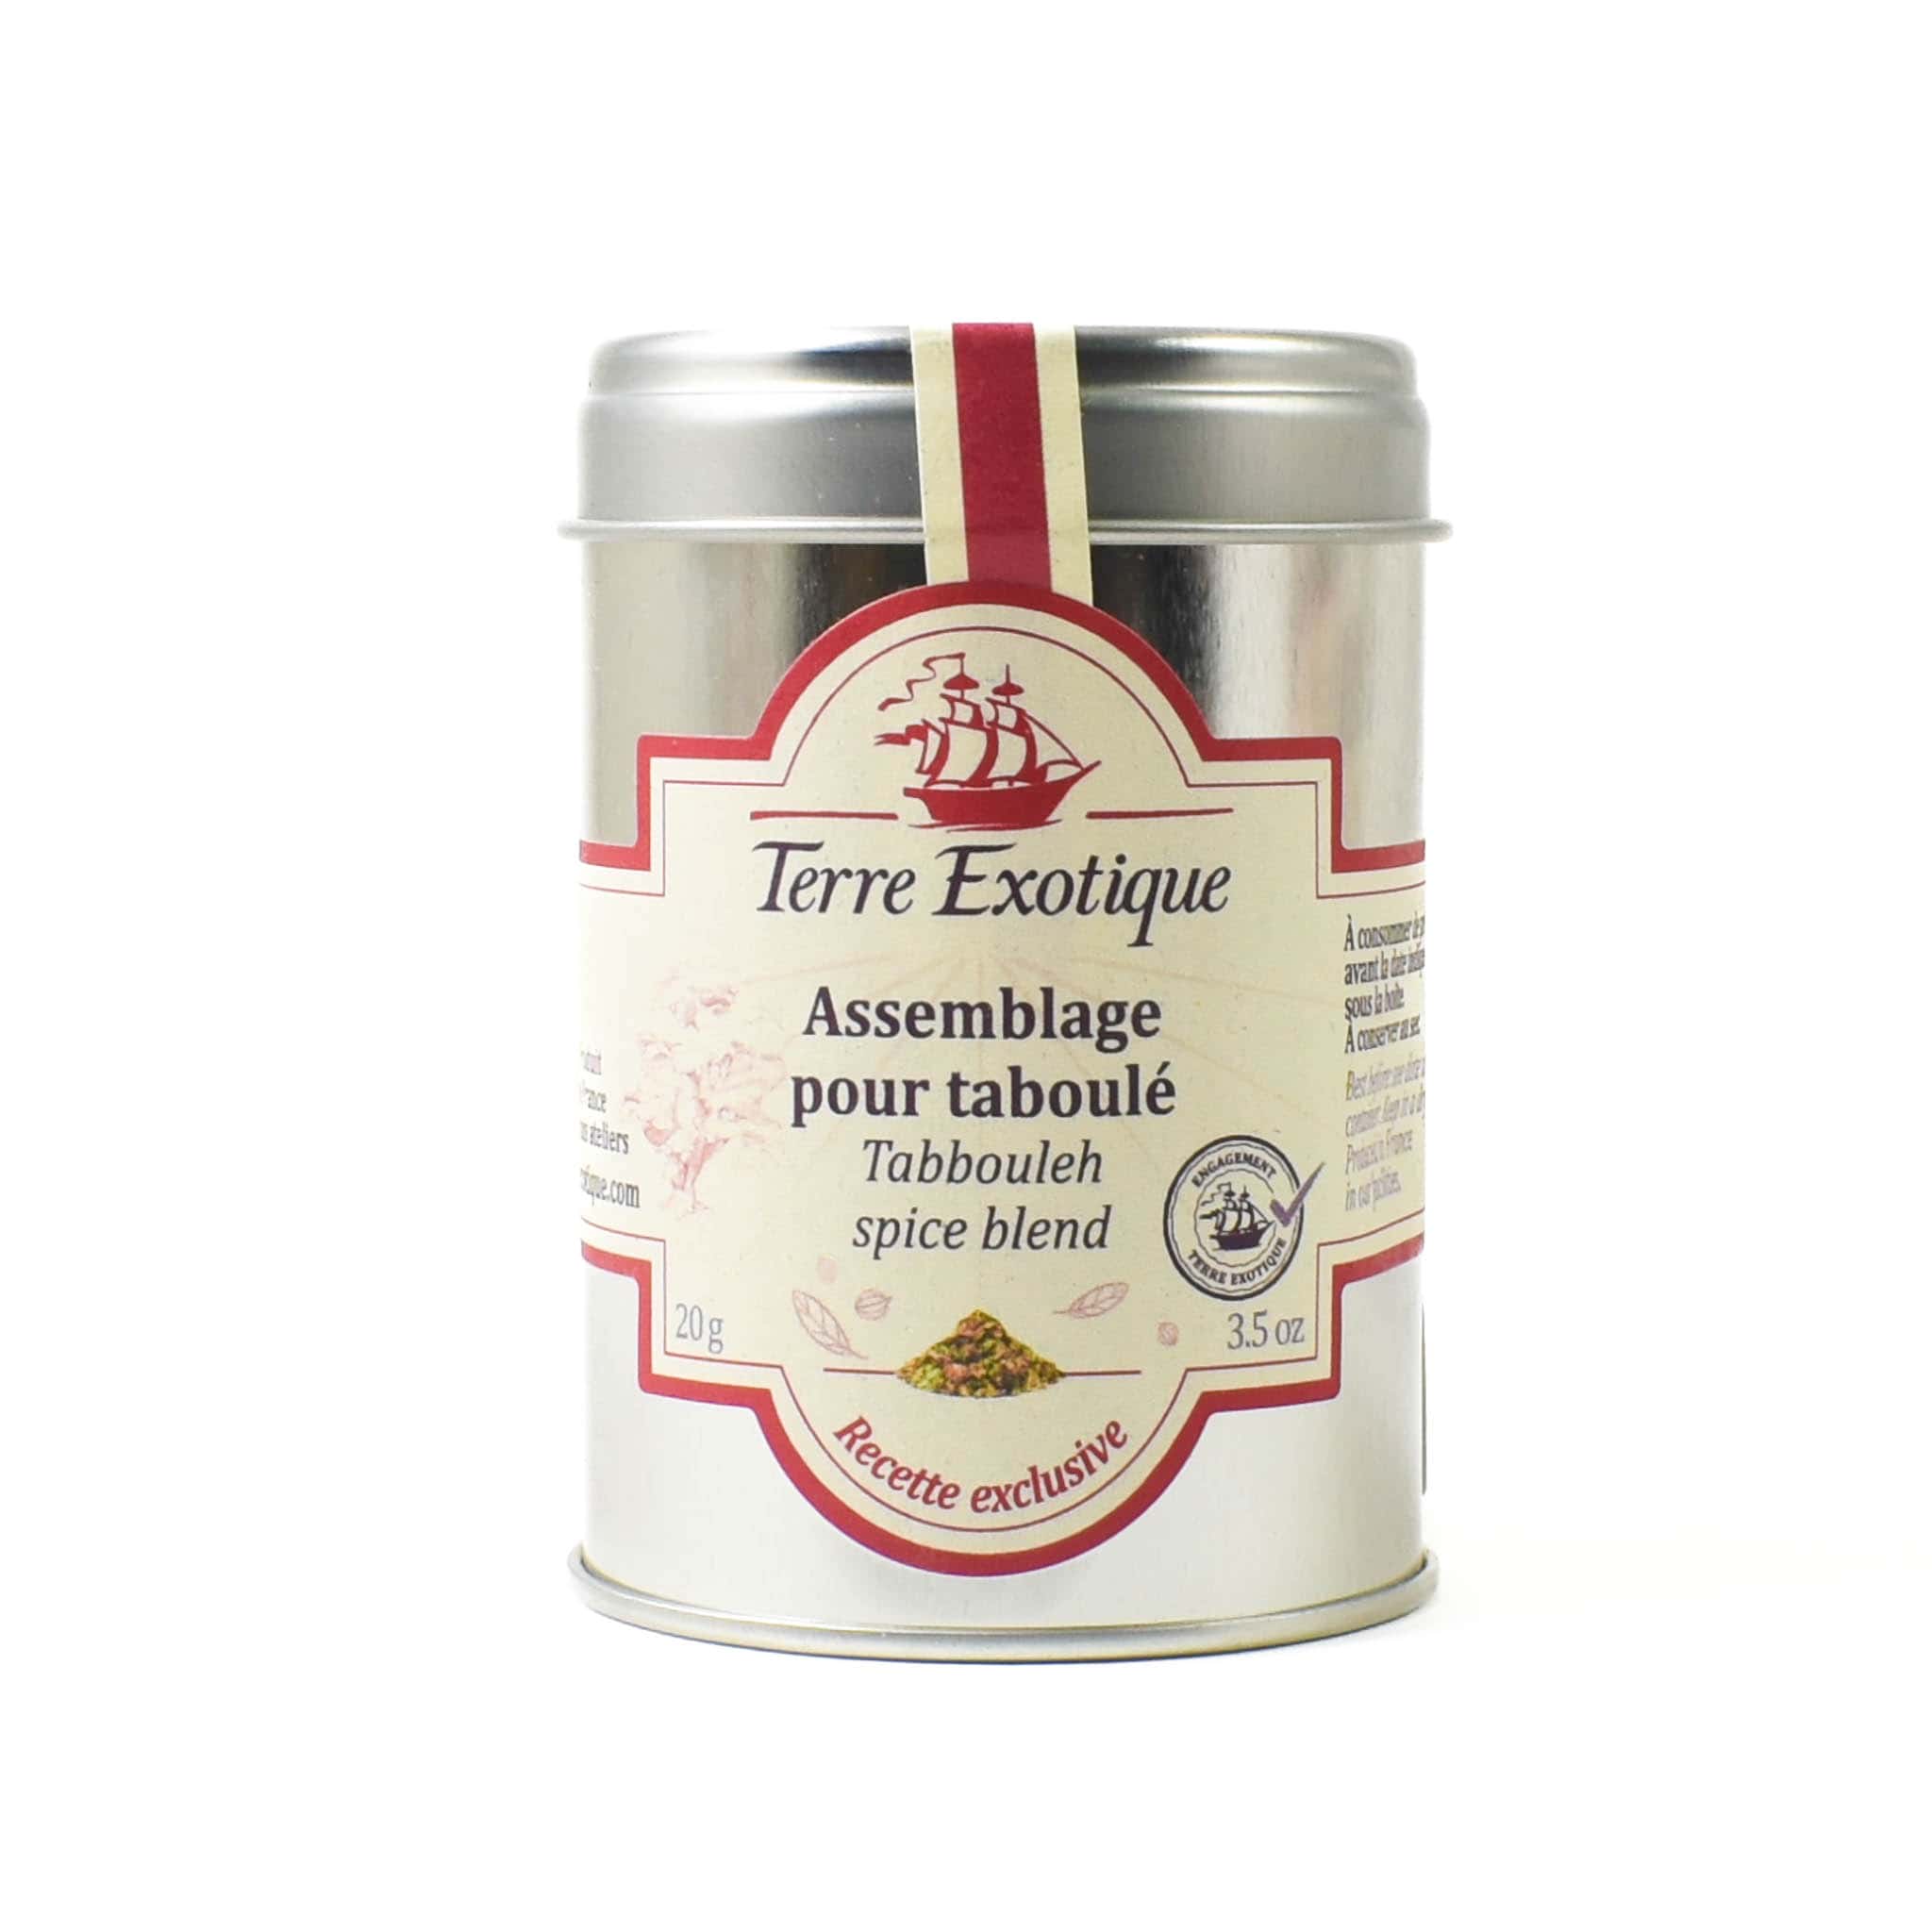 Terre Exotique Tabbouleh Spice Blend, 20g